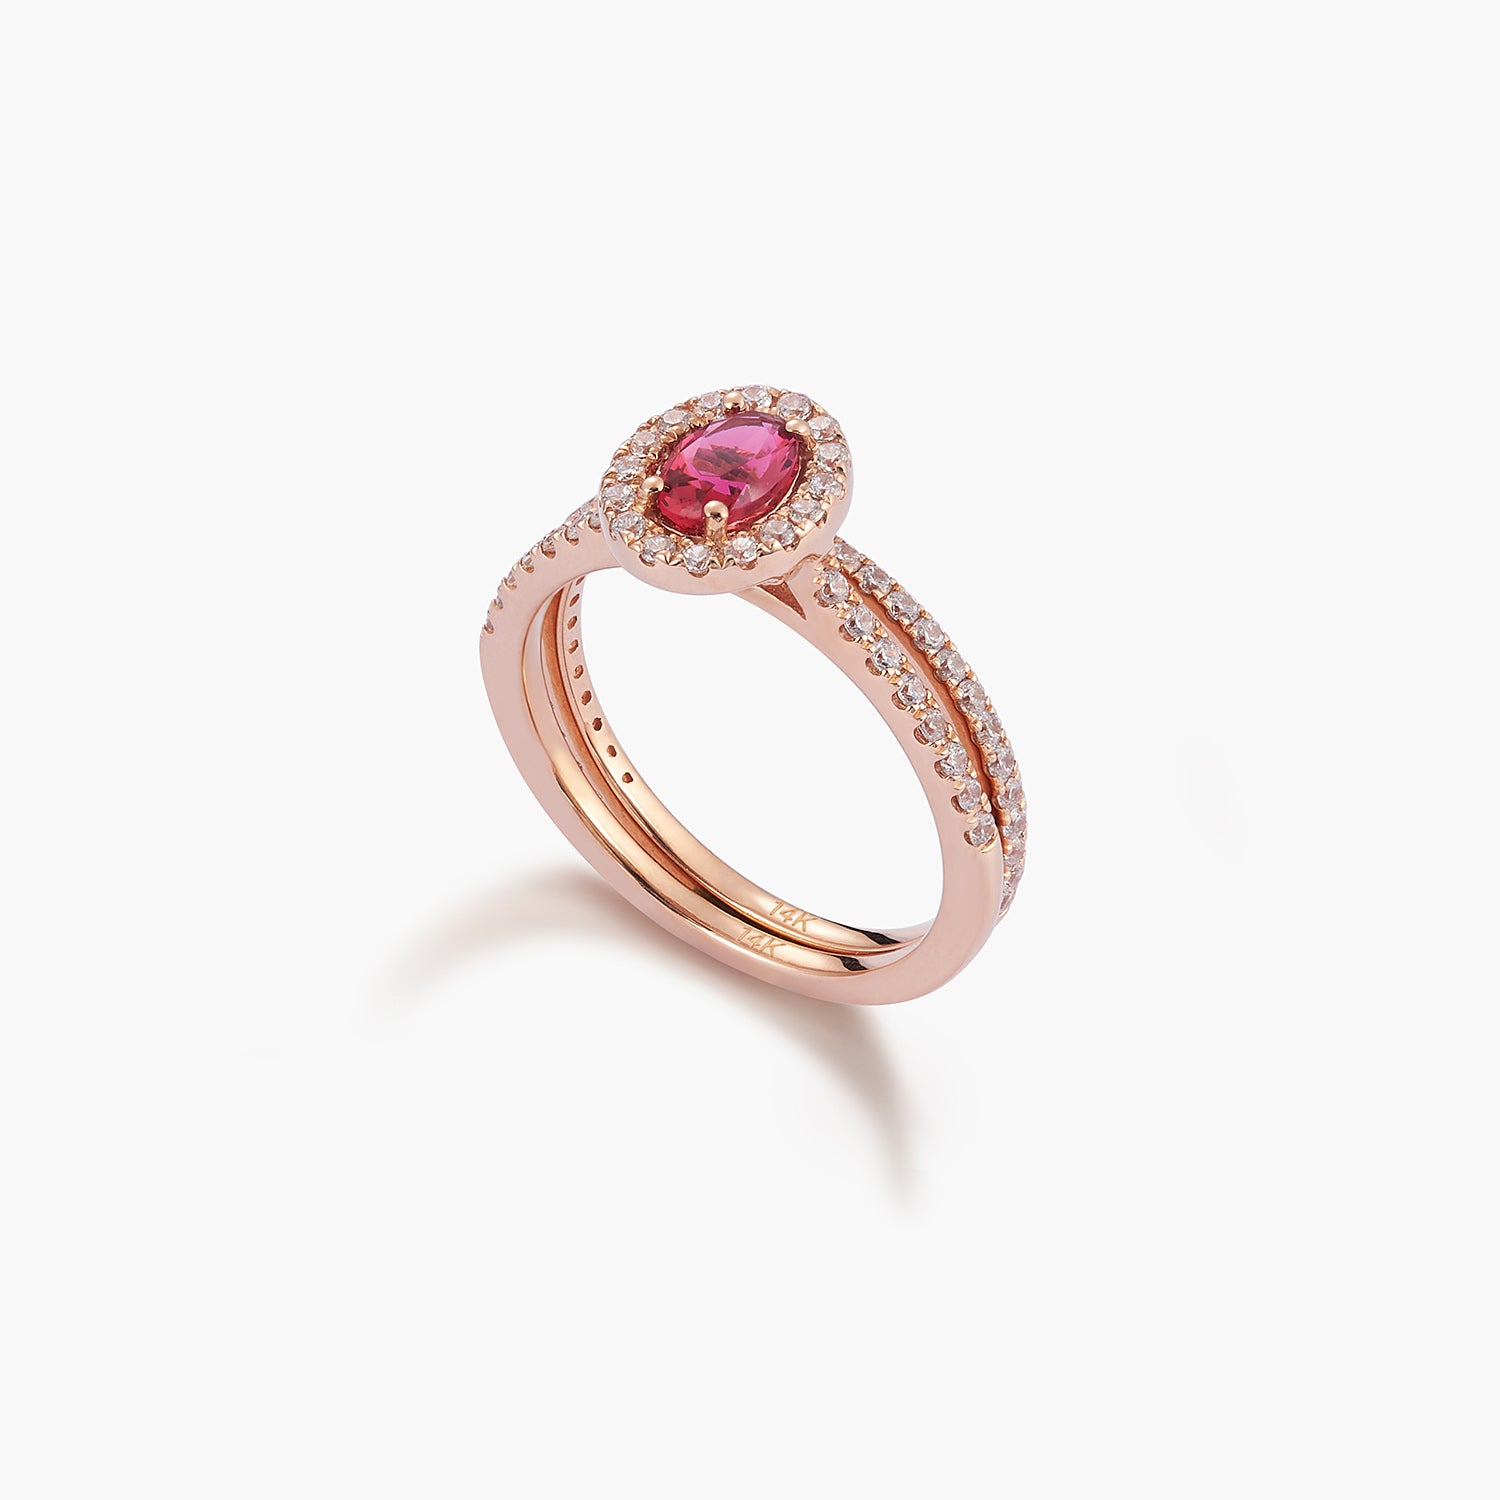 Oval Ruby Ring 2-piece Wedding Set With Diamonds